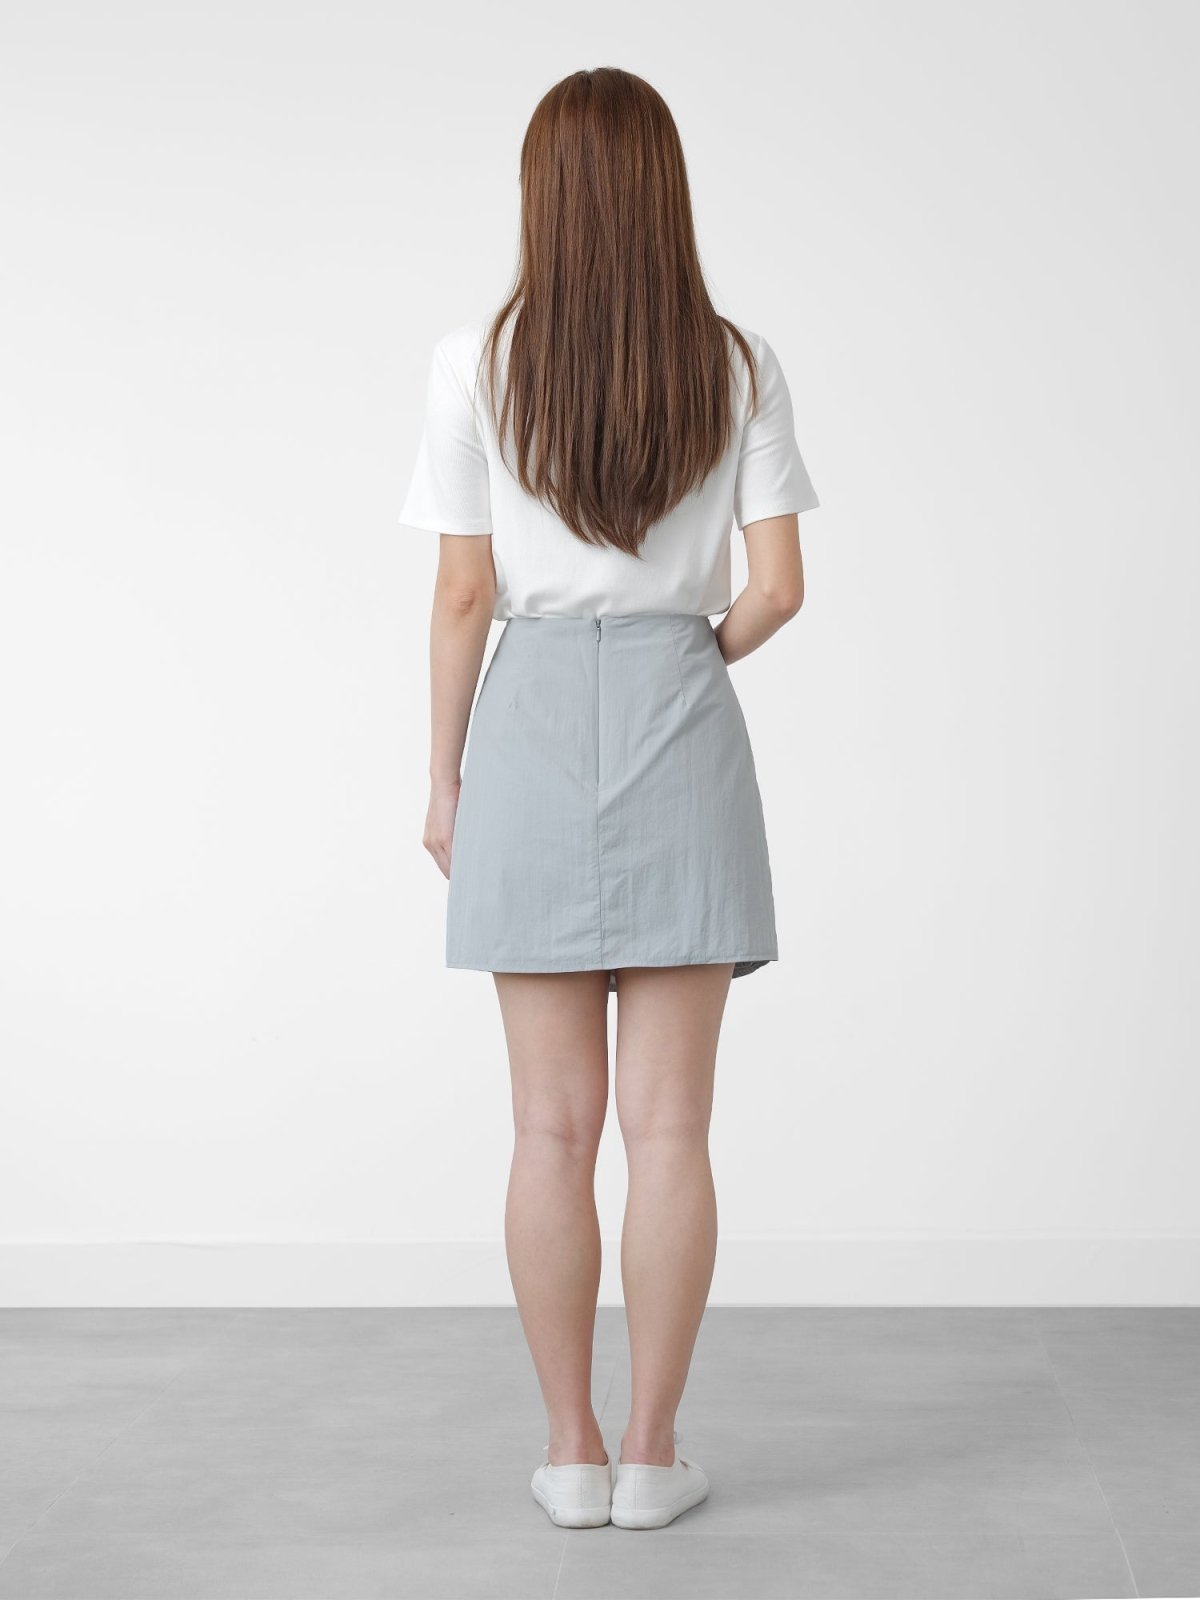 Nylon Mini Skirt - DAG-DD1449BabyBlueS - Baby Blue - S - D'zage Designs